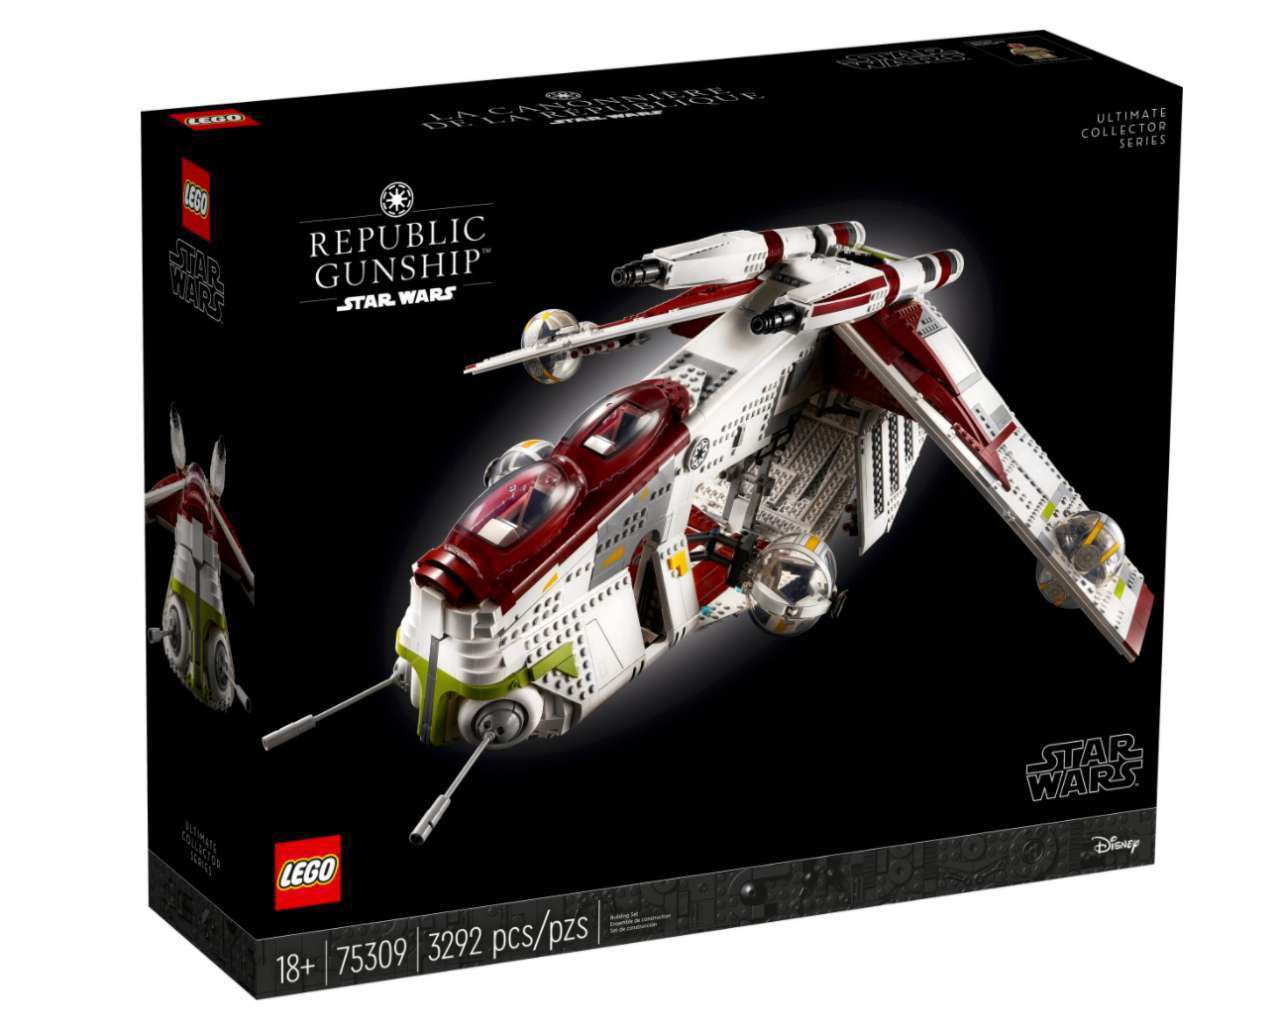 Star Wars Lego Republic Gunship image #1